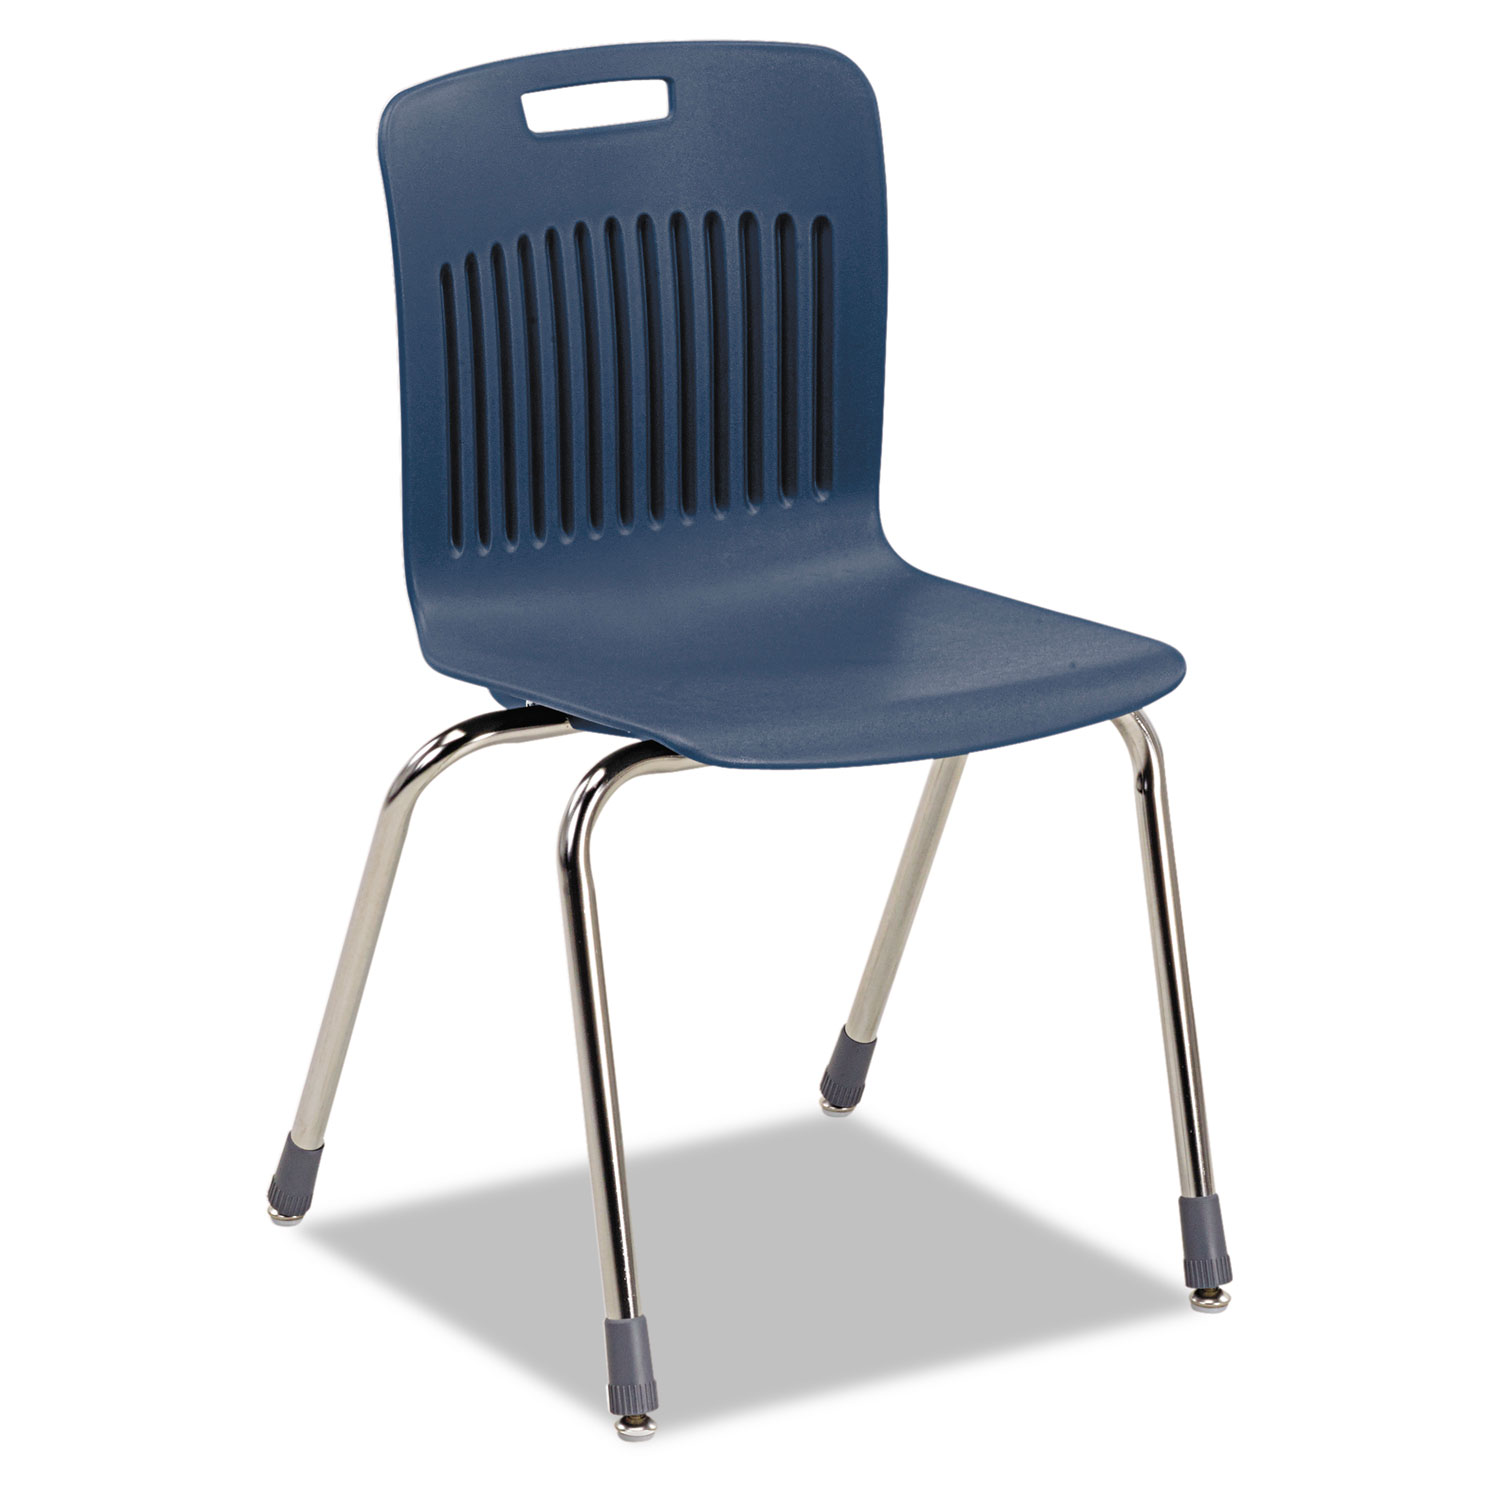 Analogy Extra-Large Ergonomic Stack Chair, Navy/Chrome, 4/Carton